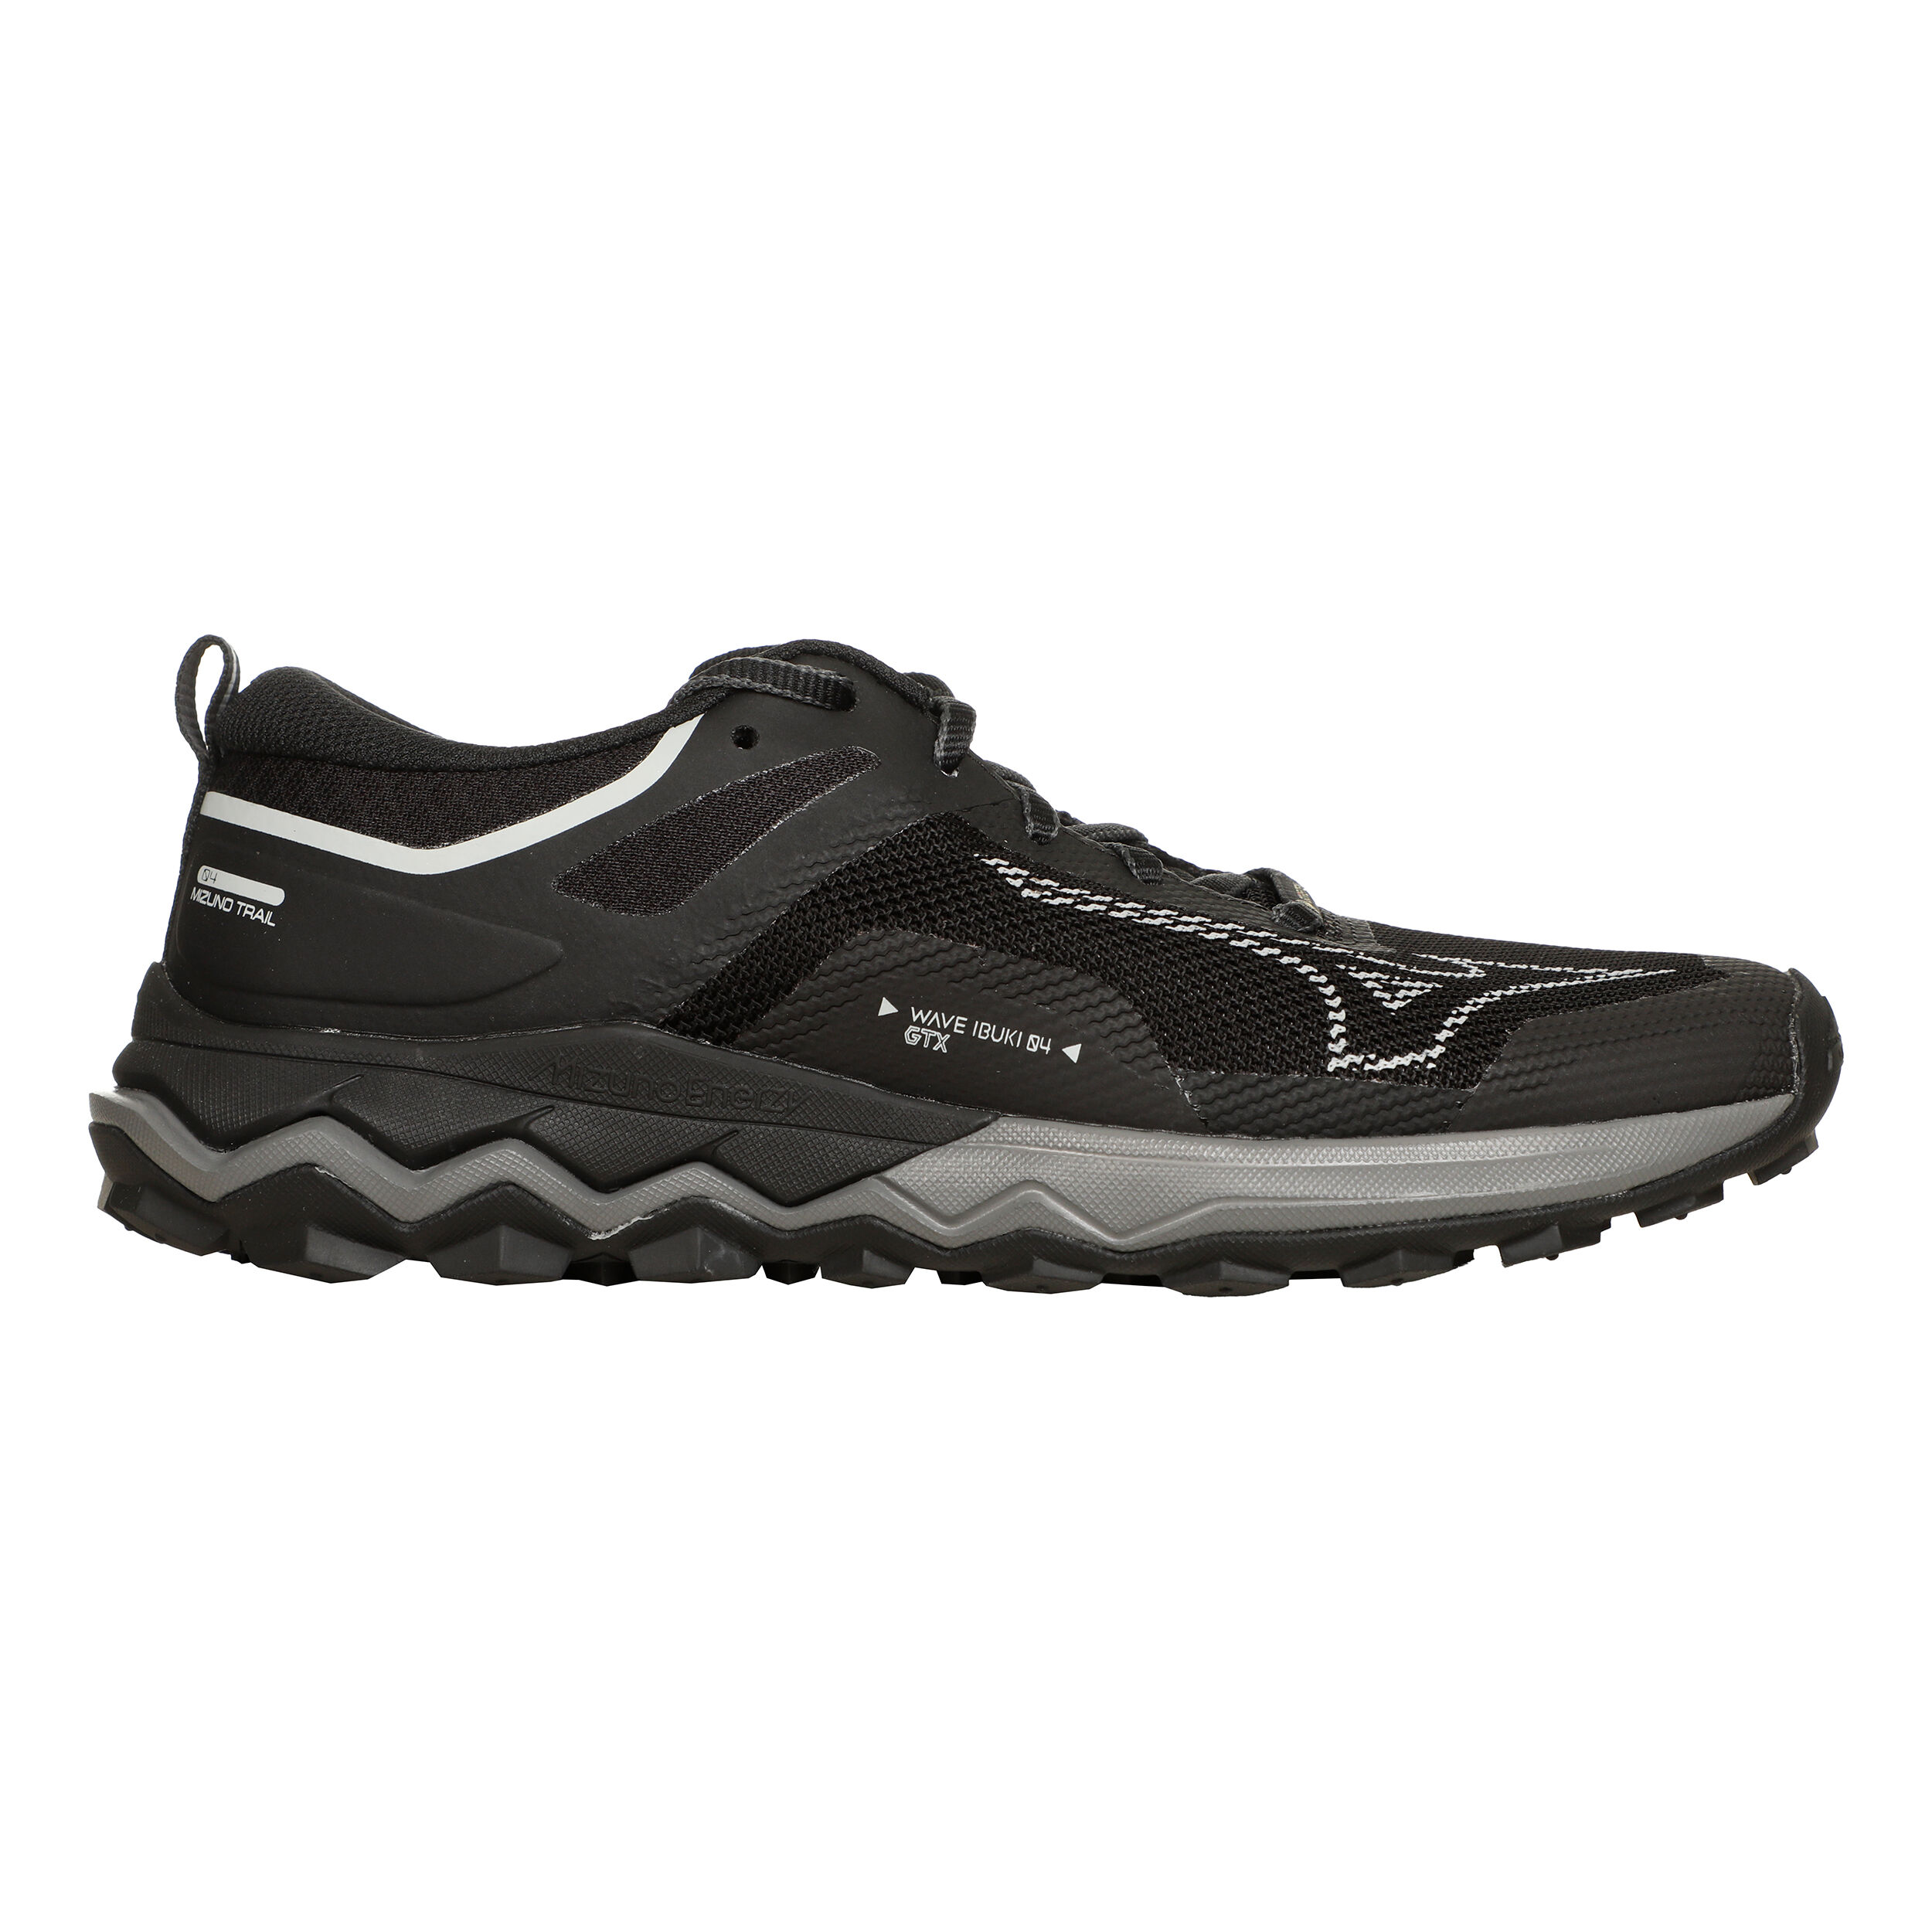 Wave Ibuki 4 GTX Trail Running Shoe Women - Black, Grey